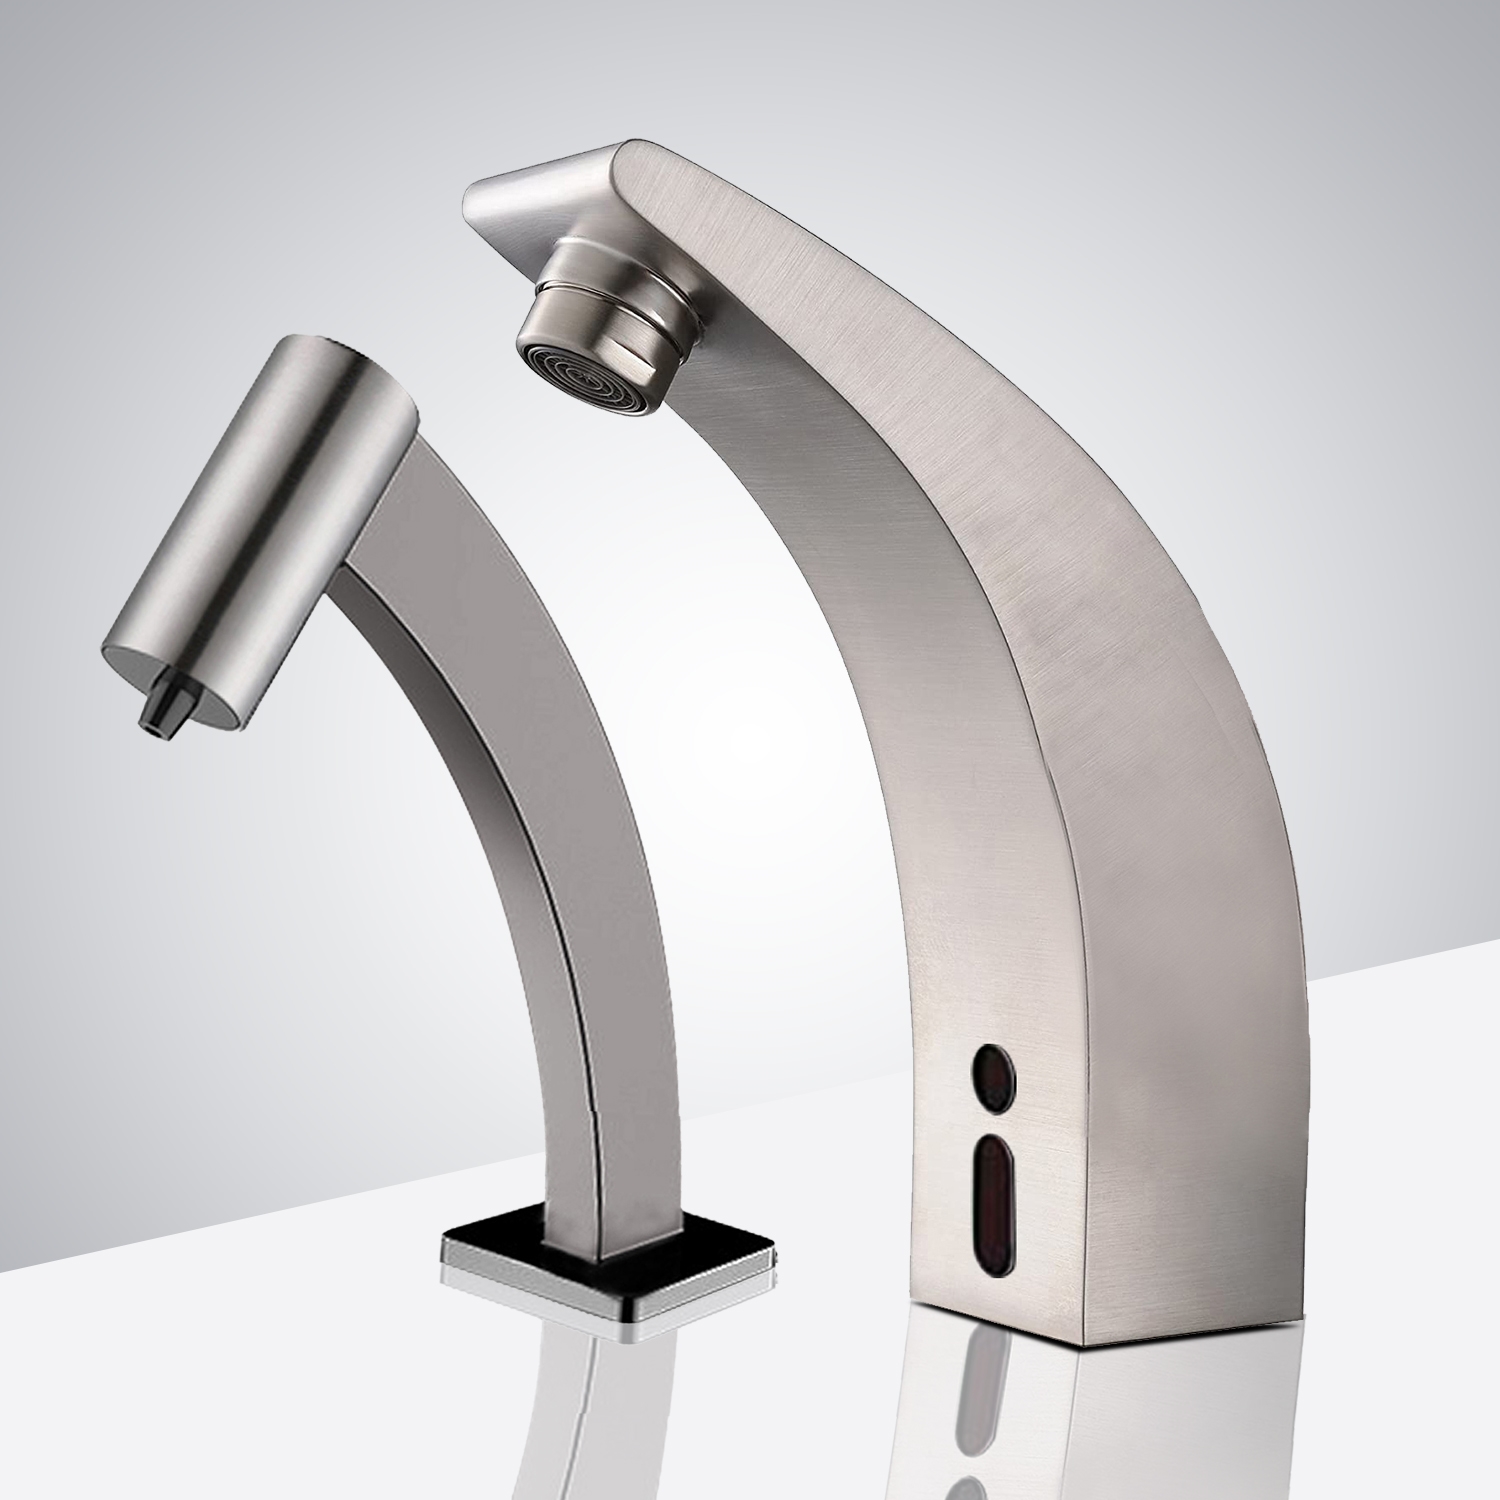 Fontana Cholet Motion Sensor Faucet & Automatic Soap Dispenser for Restrooms in Brushed Nickel Finish